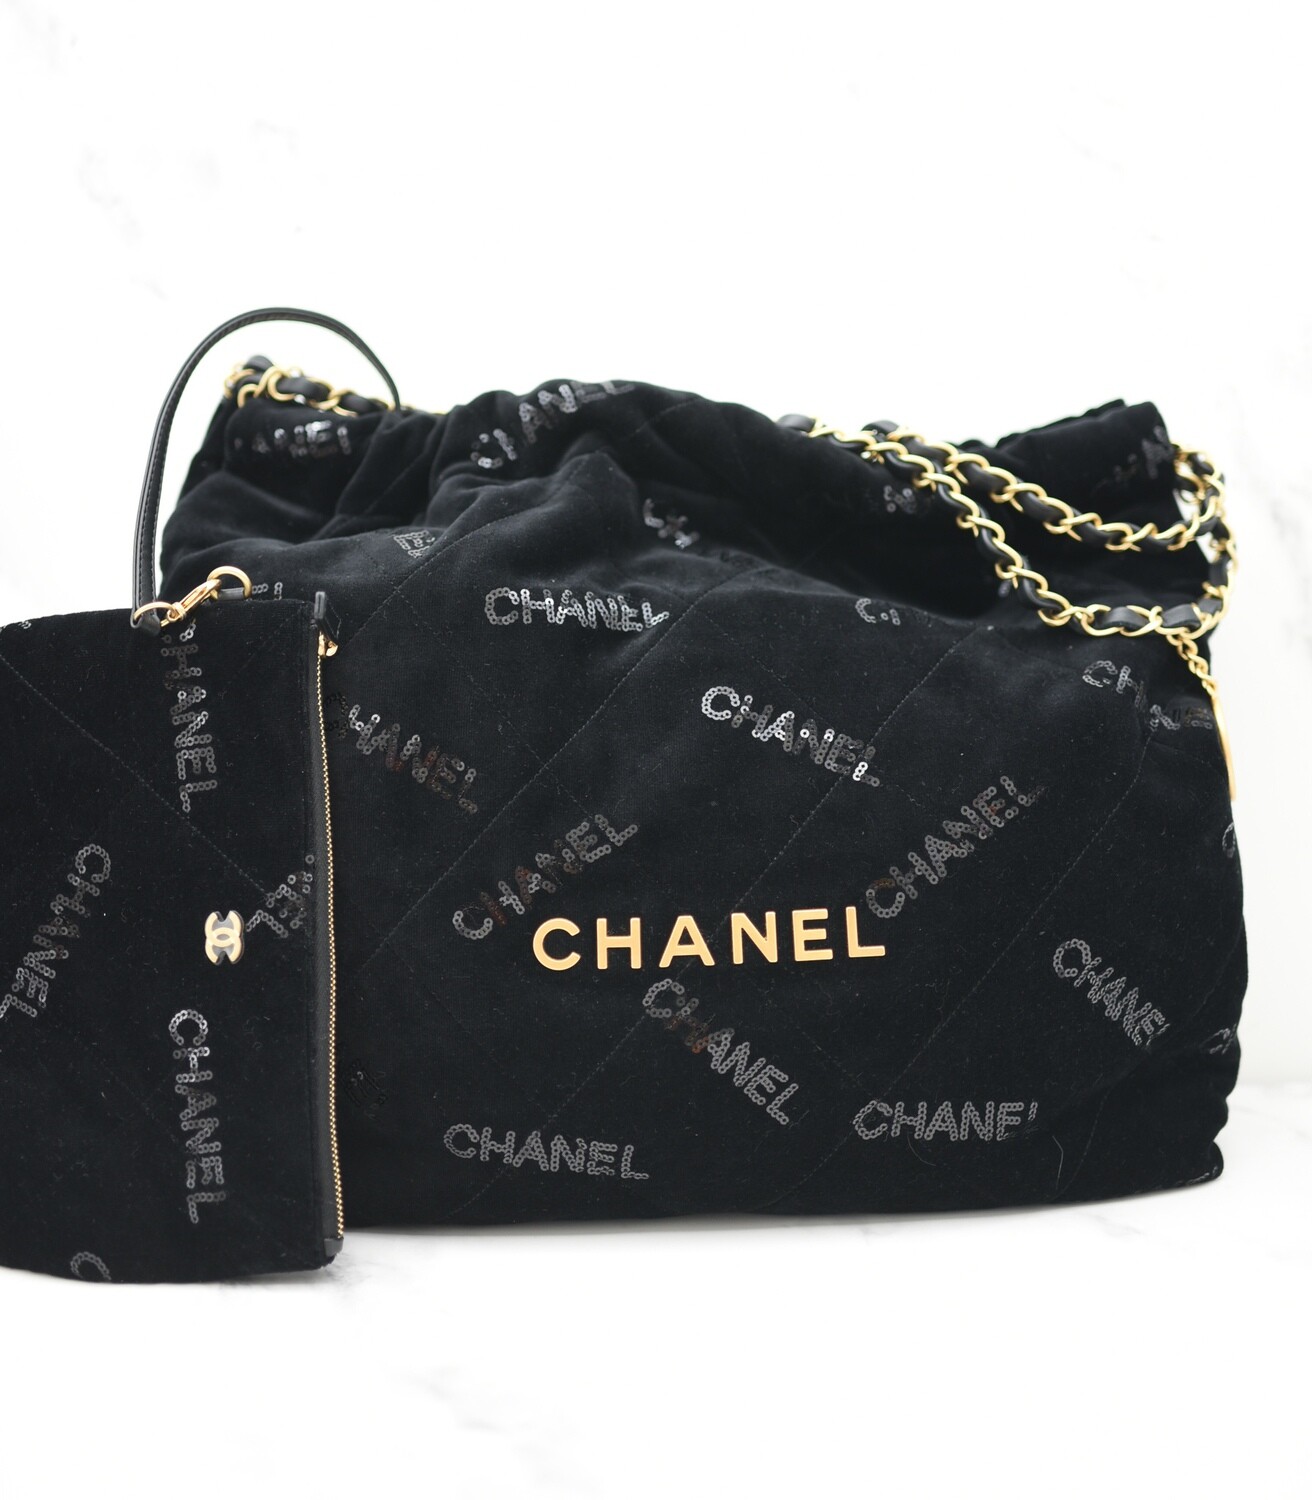 Chanel 22 Small, Black Velvet with Sequin, Gold Hardware, New in Box GA002